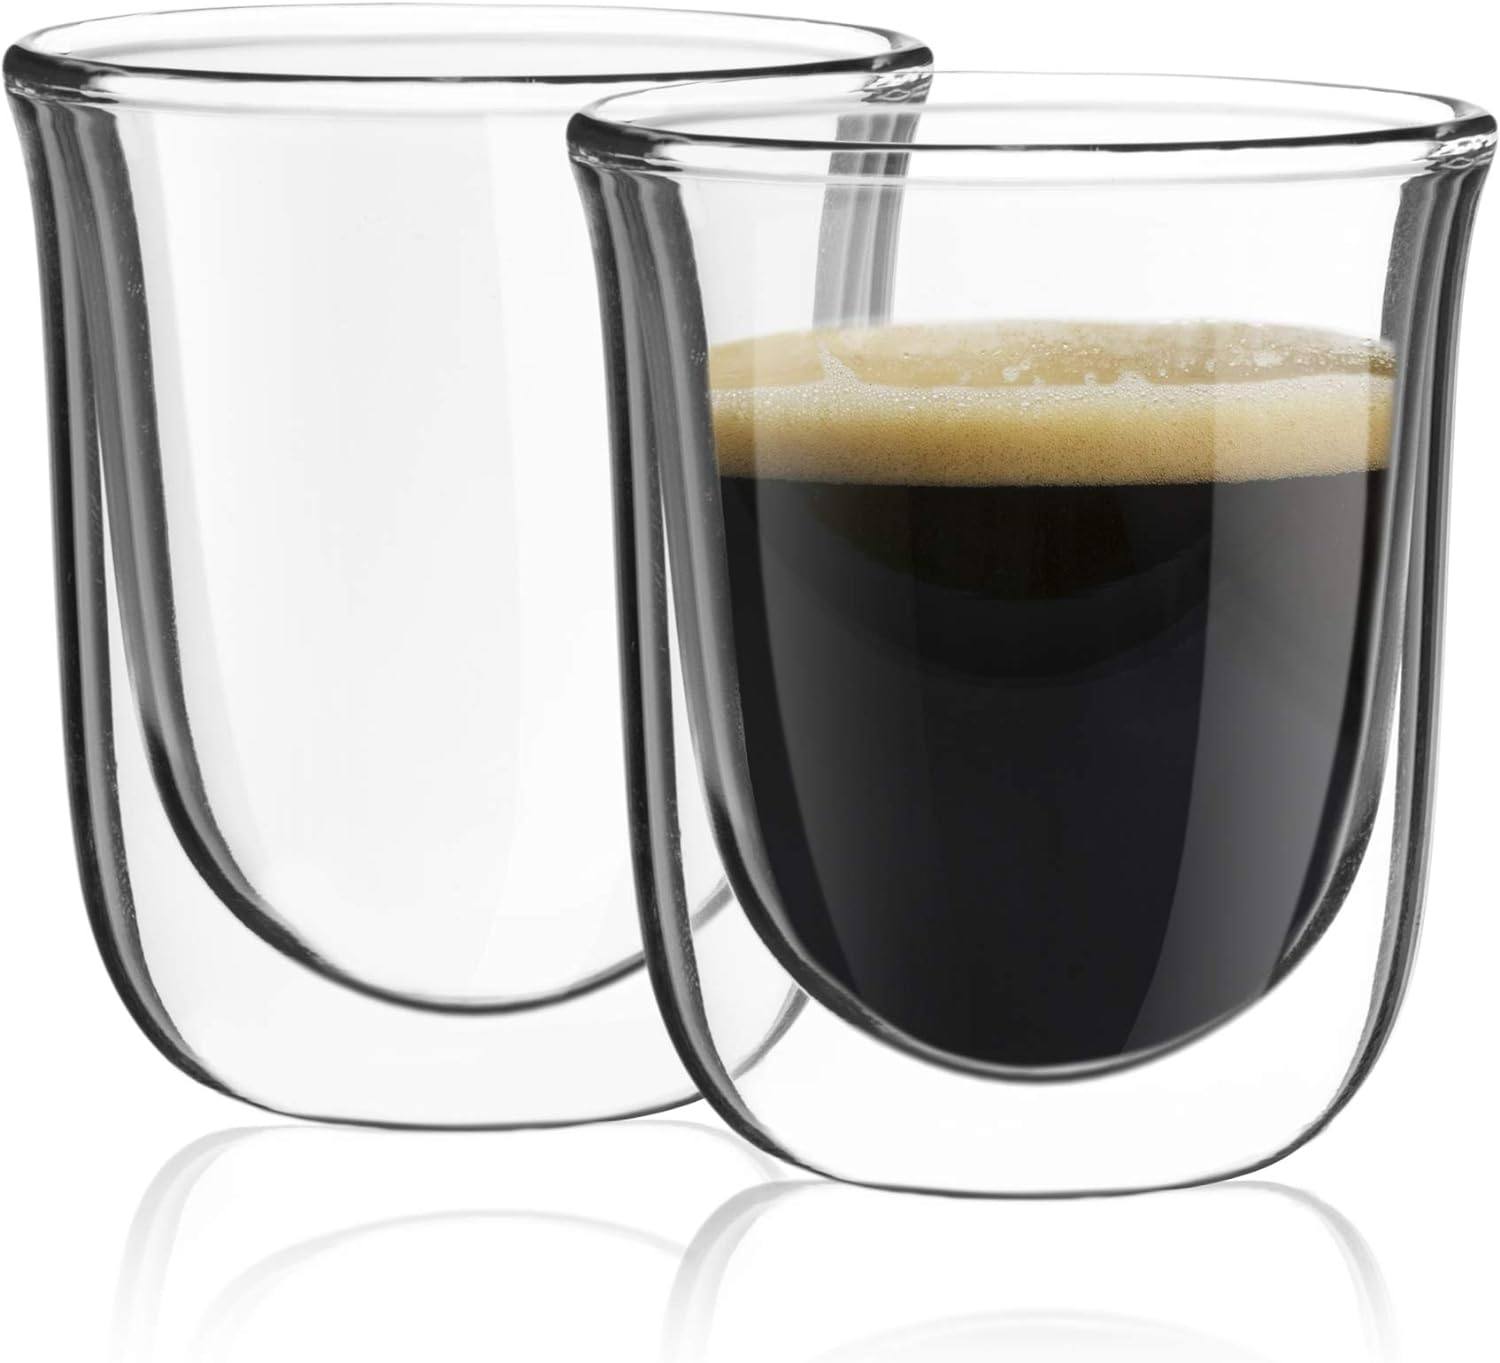 Retro glass coffee cup |14 oz